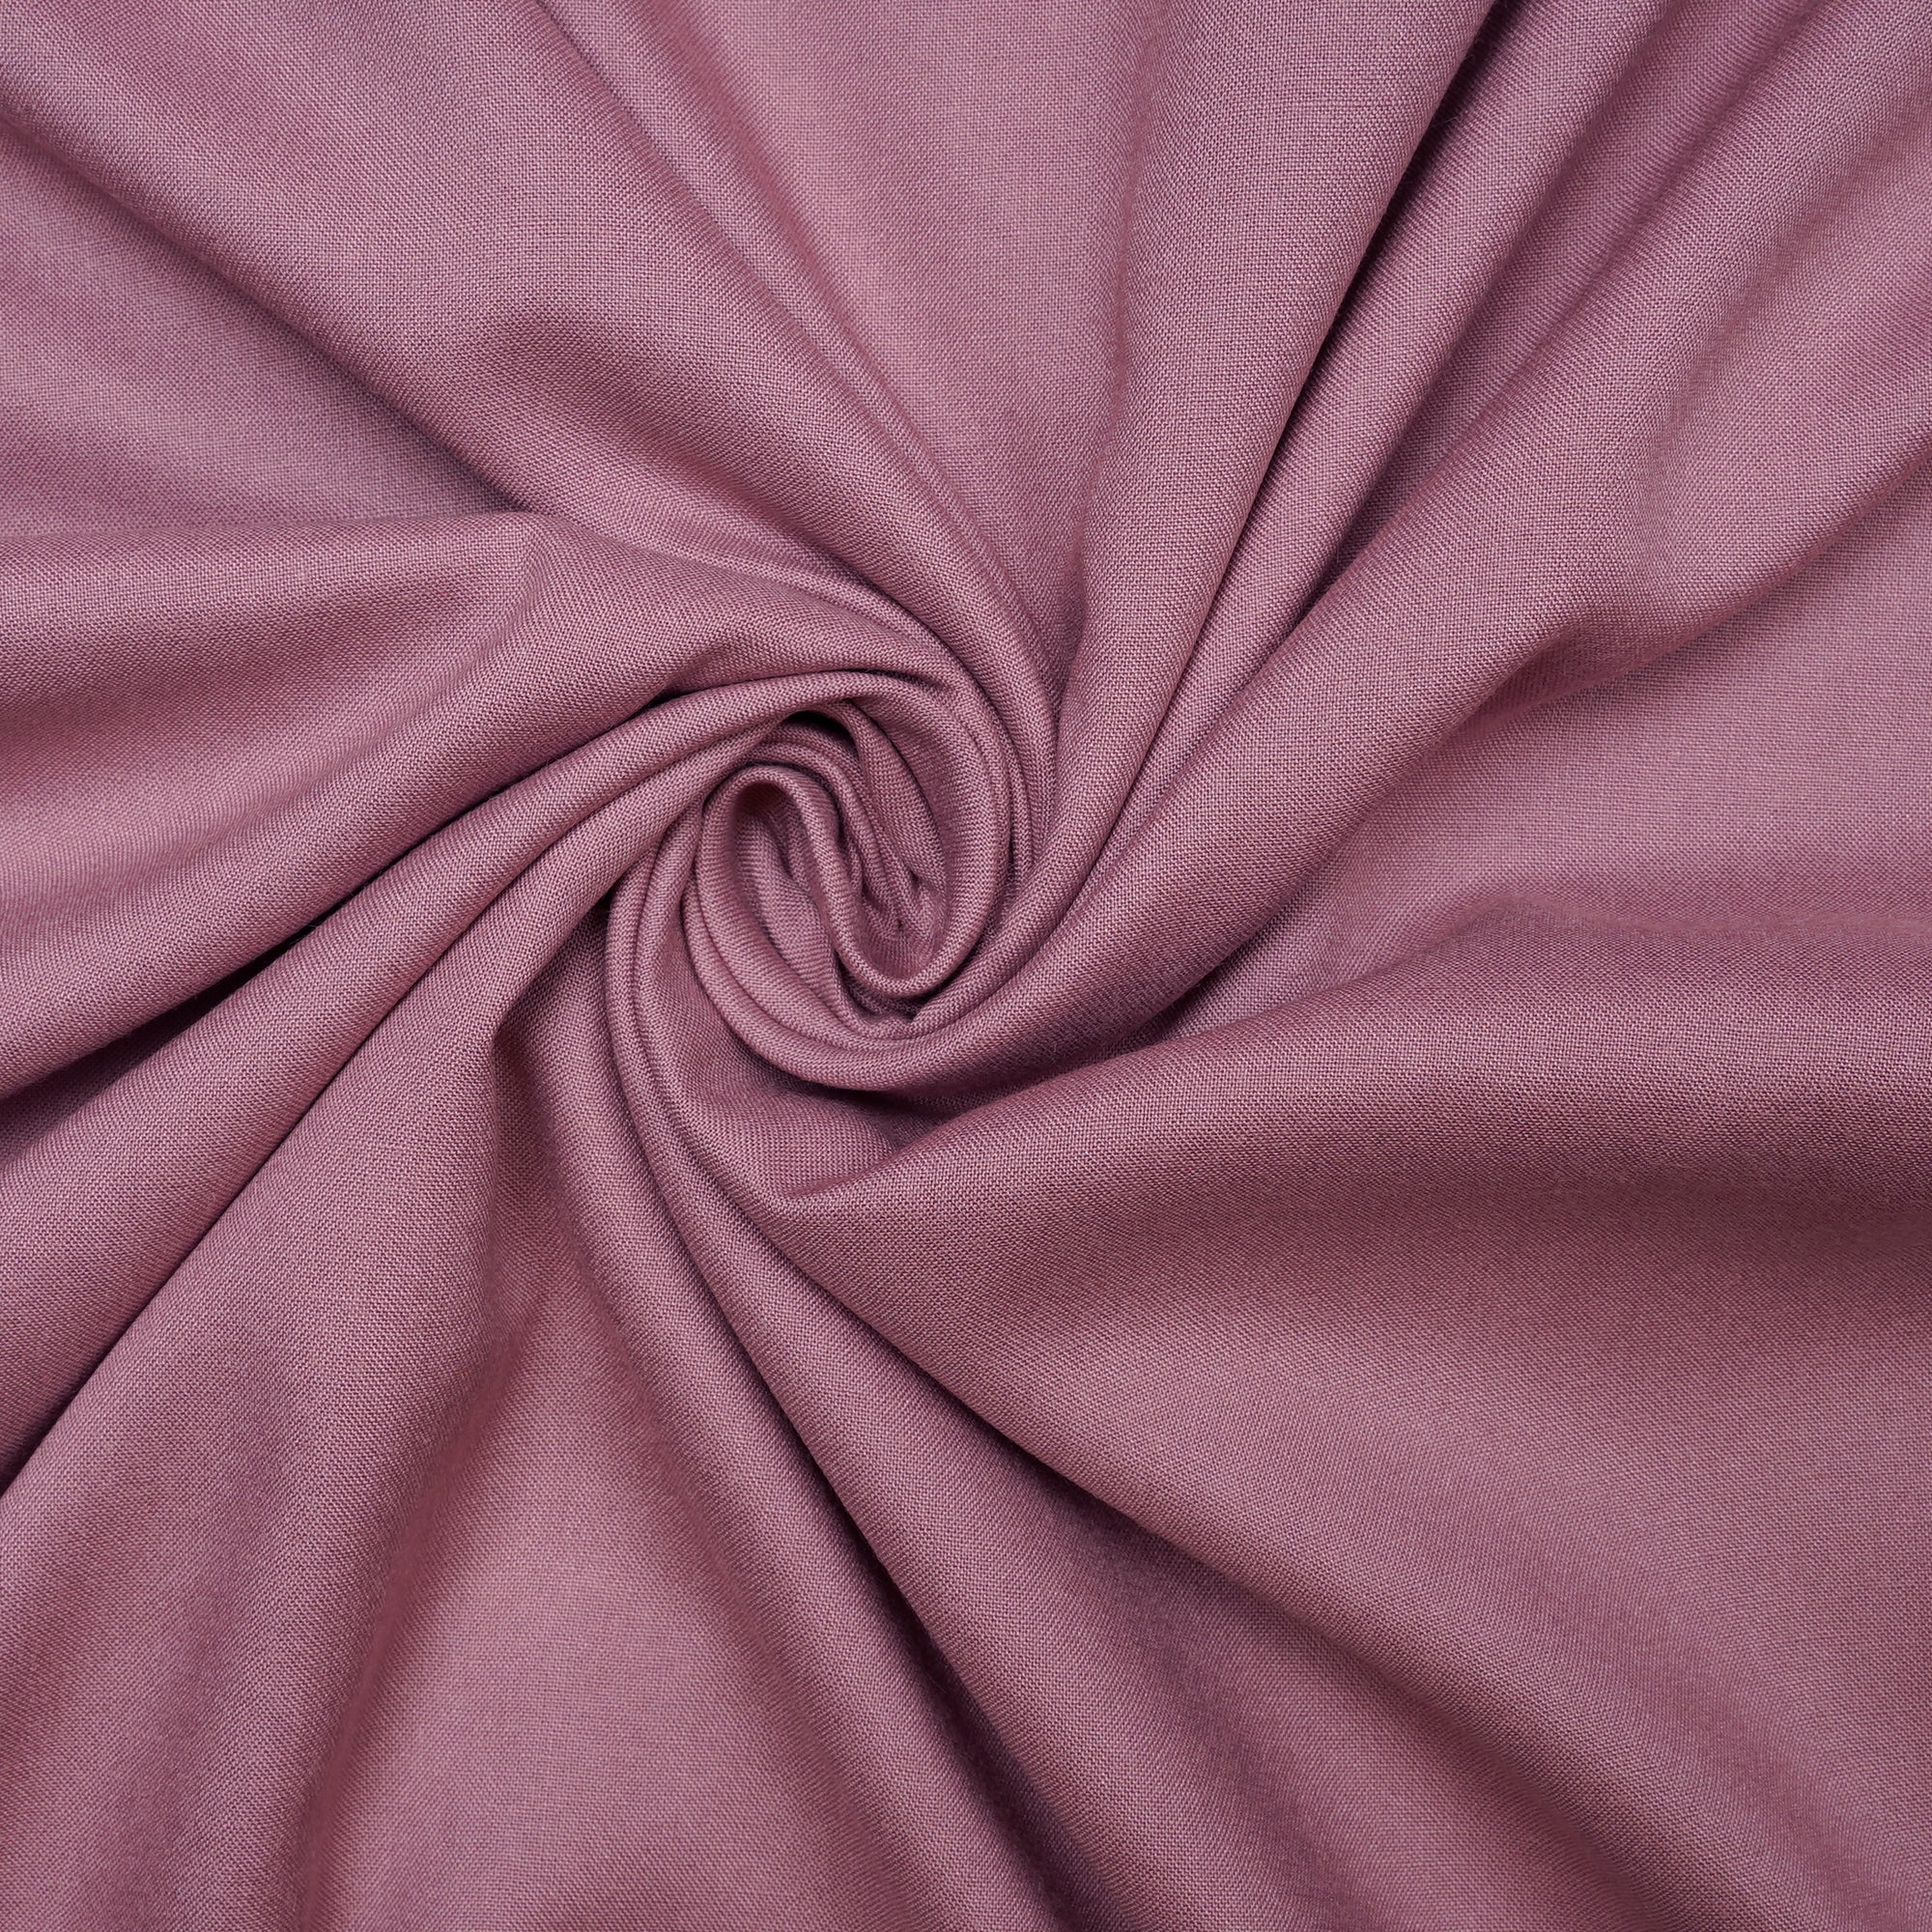 Pale Mauve Mill Dyed Rayon Fabric